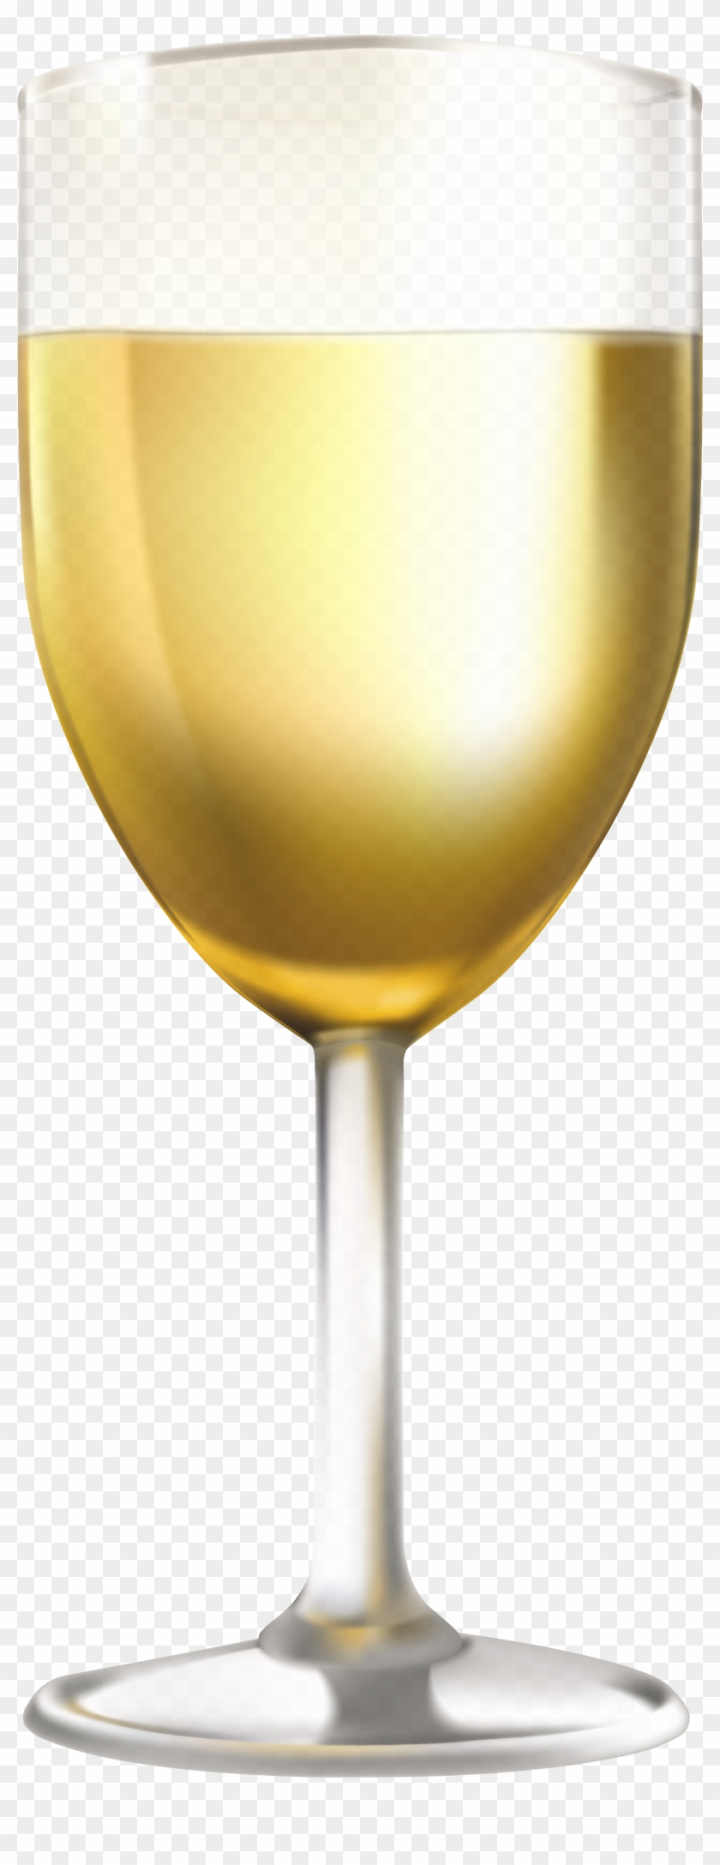 Free: White Wine Glass Clip Art Image - White Wine Glass Png 